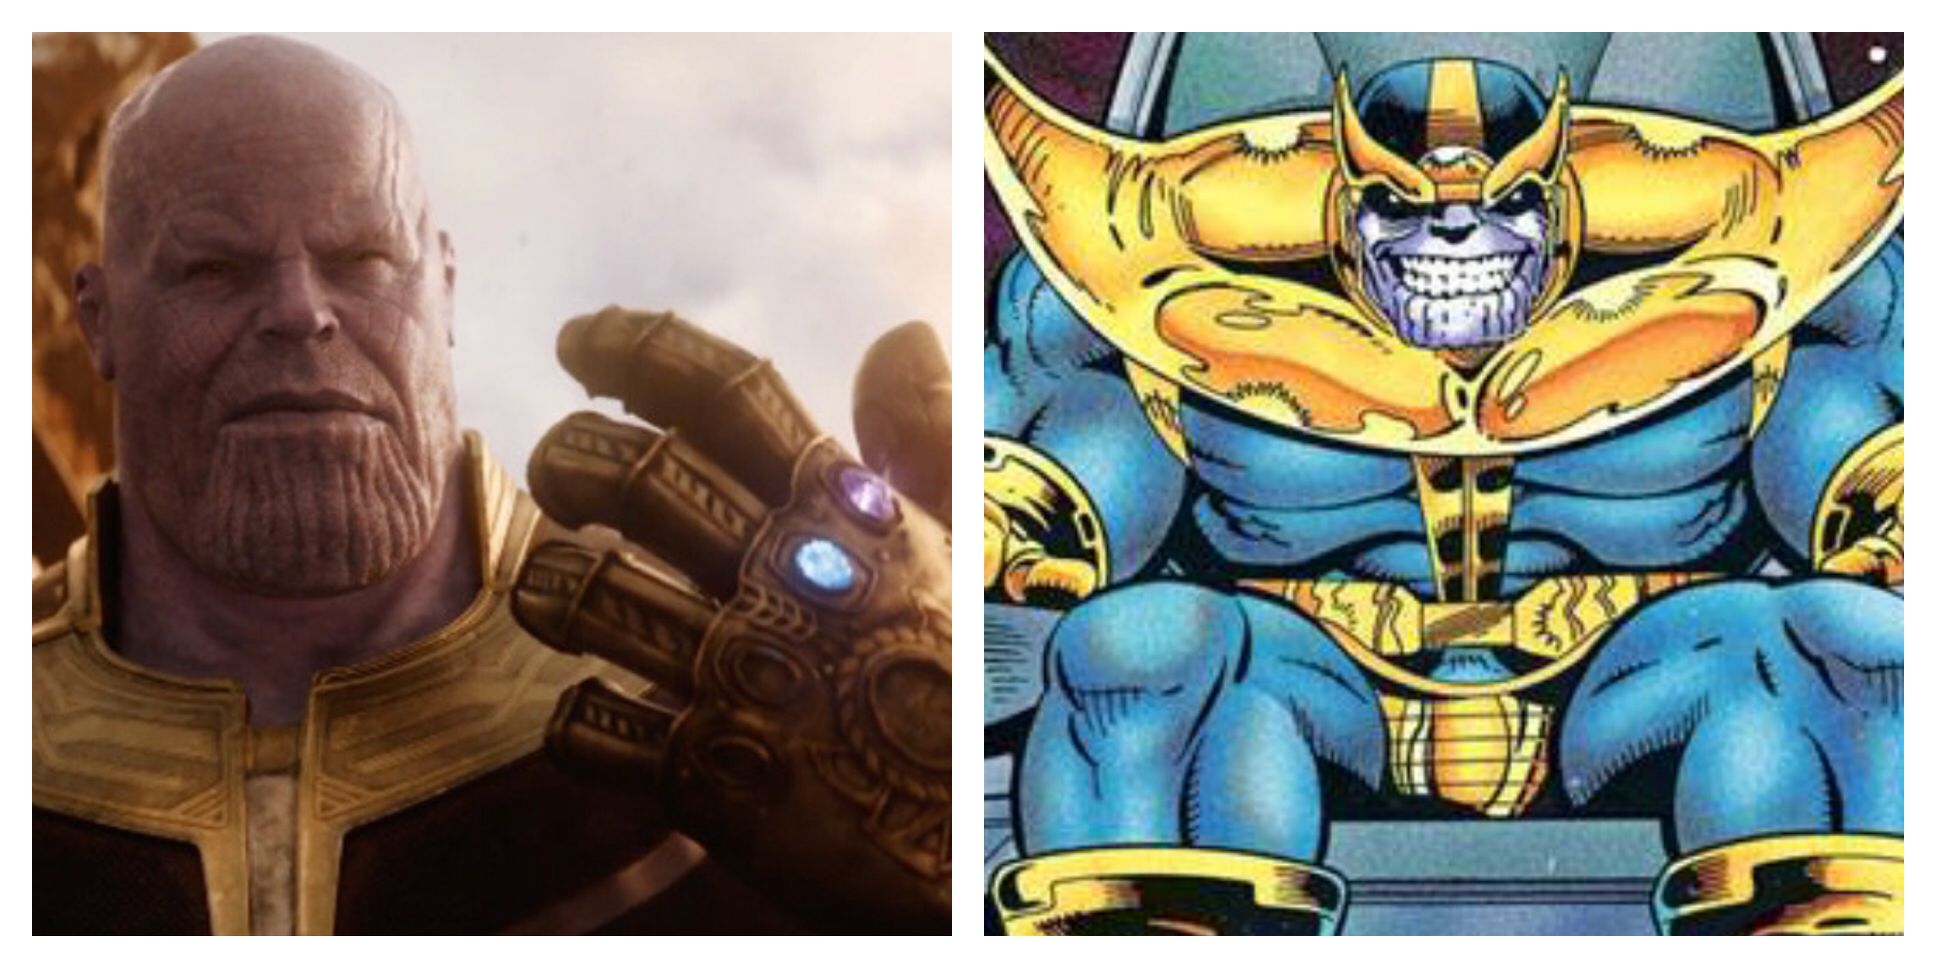 Comic Book Thanos is Stronger Than MCU Thanos